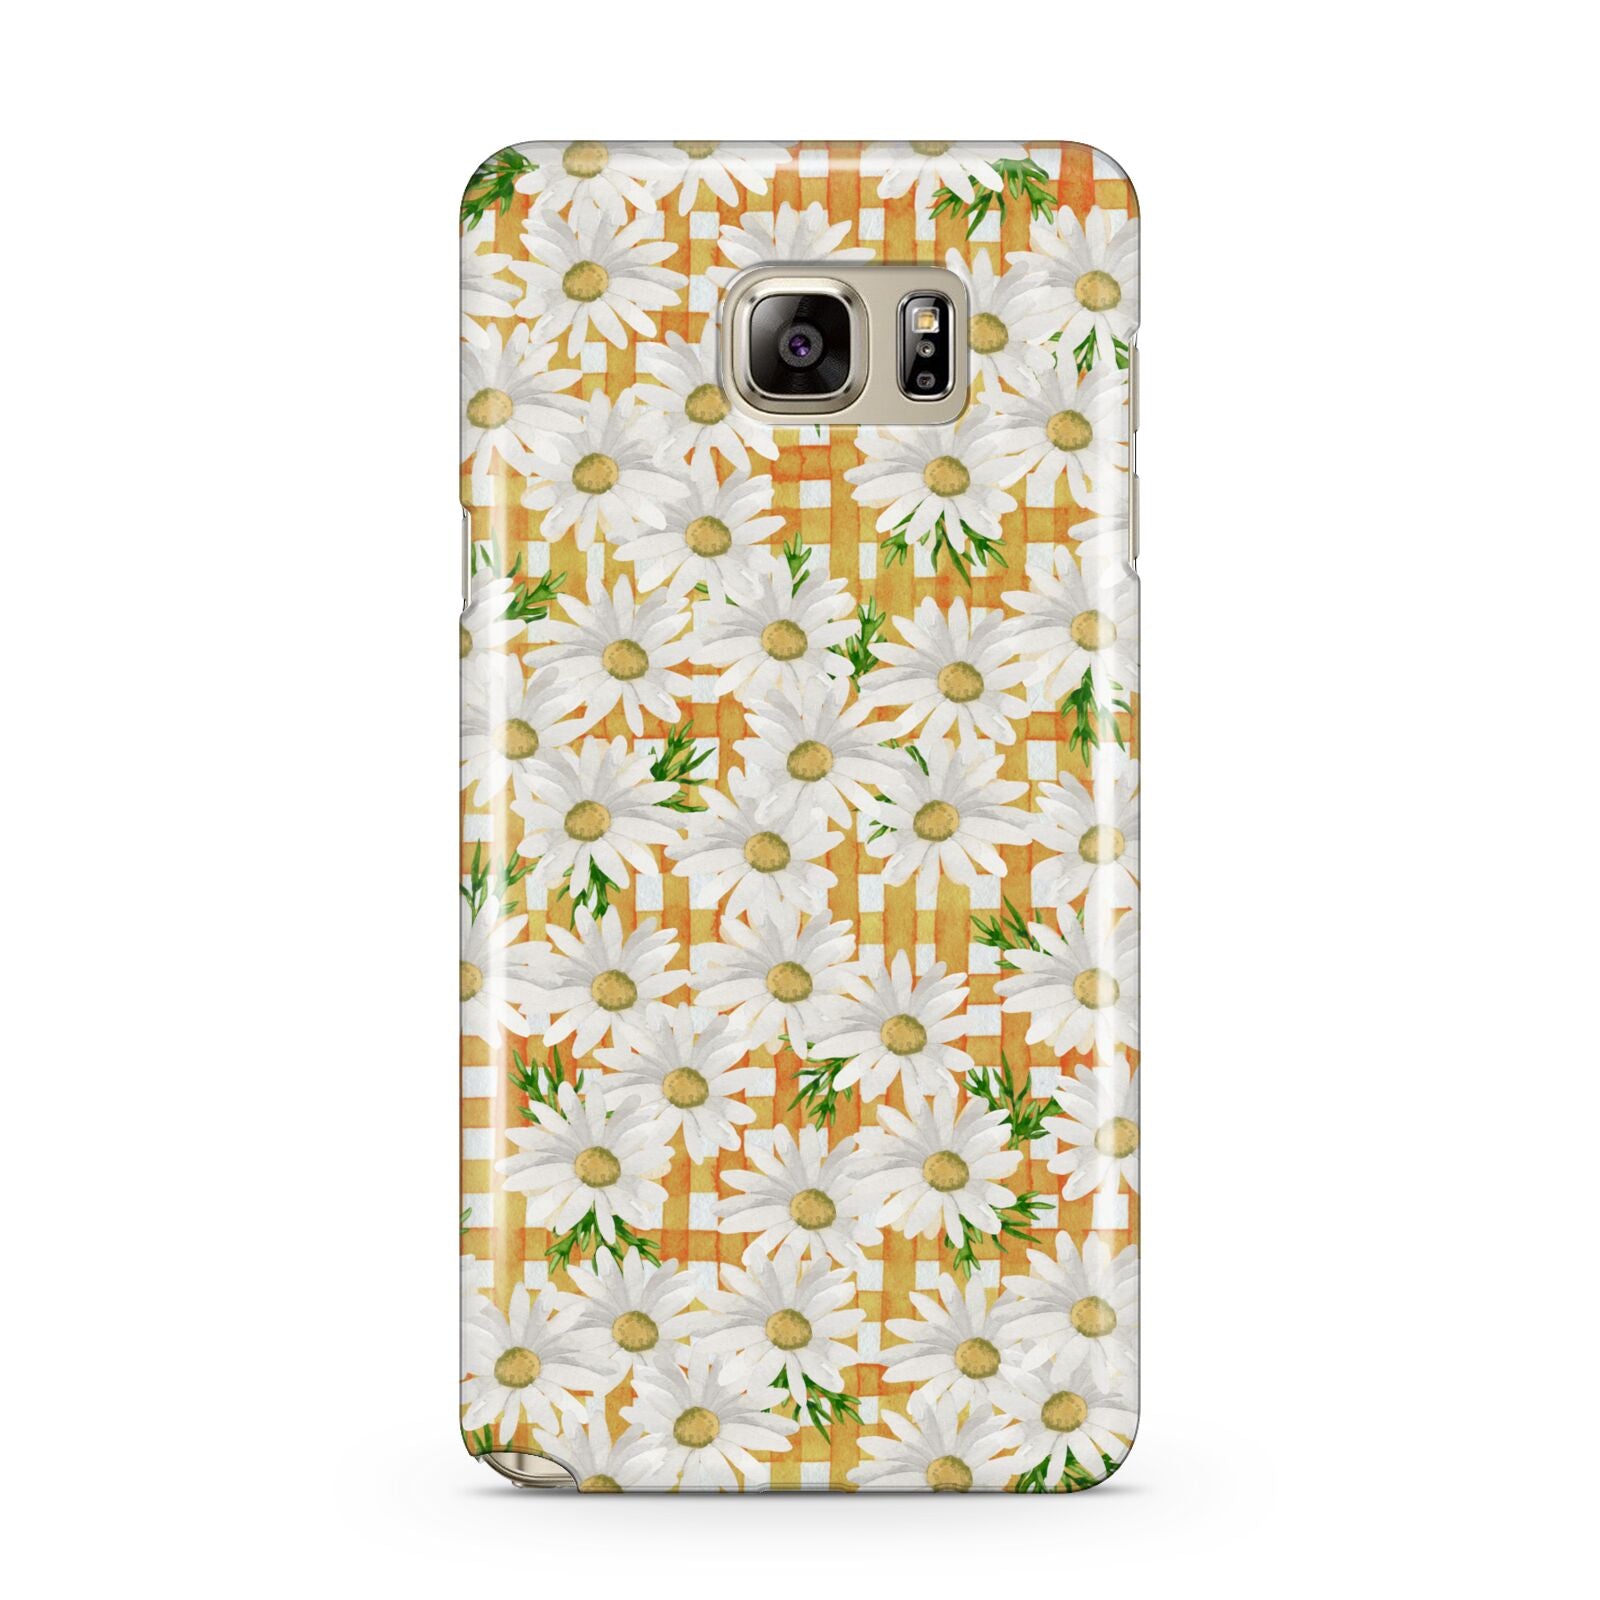 Checkered Daisy Samsung Galaxy Note 5 Case